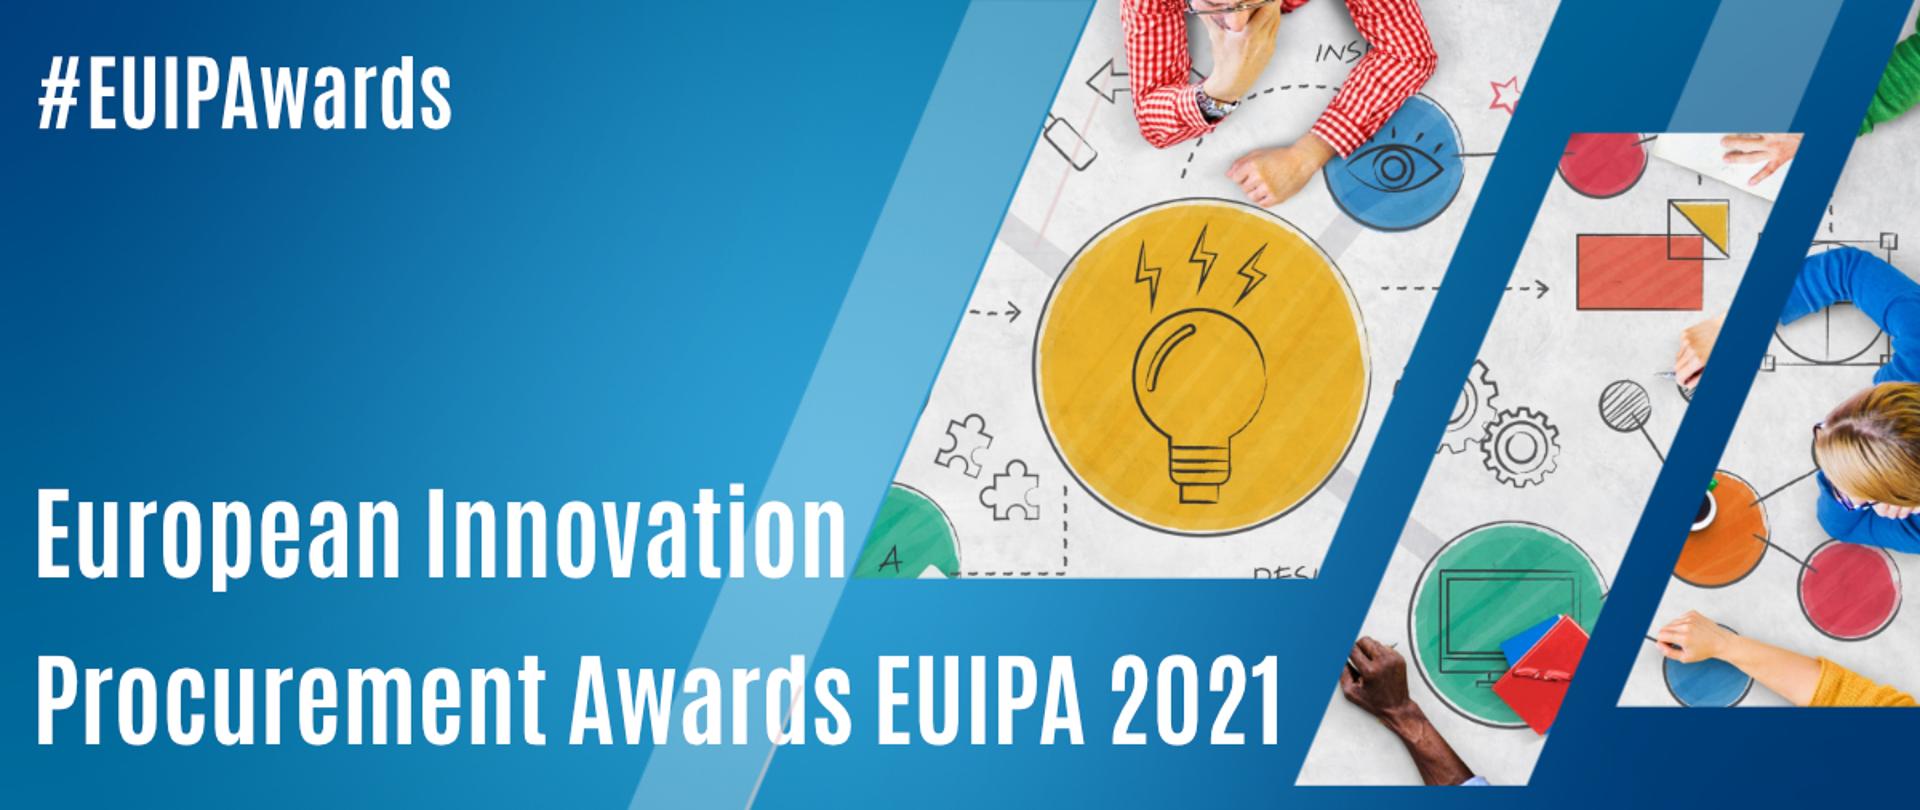 European Innovation Procurement Awards EUIPA 2021